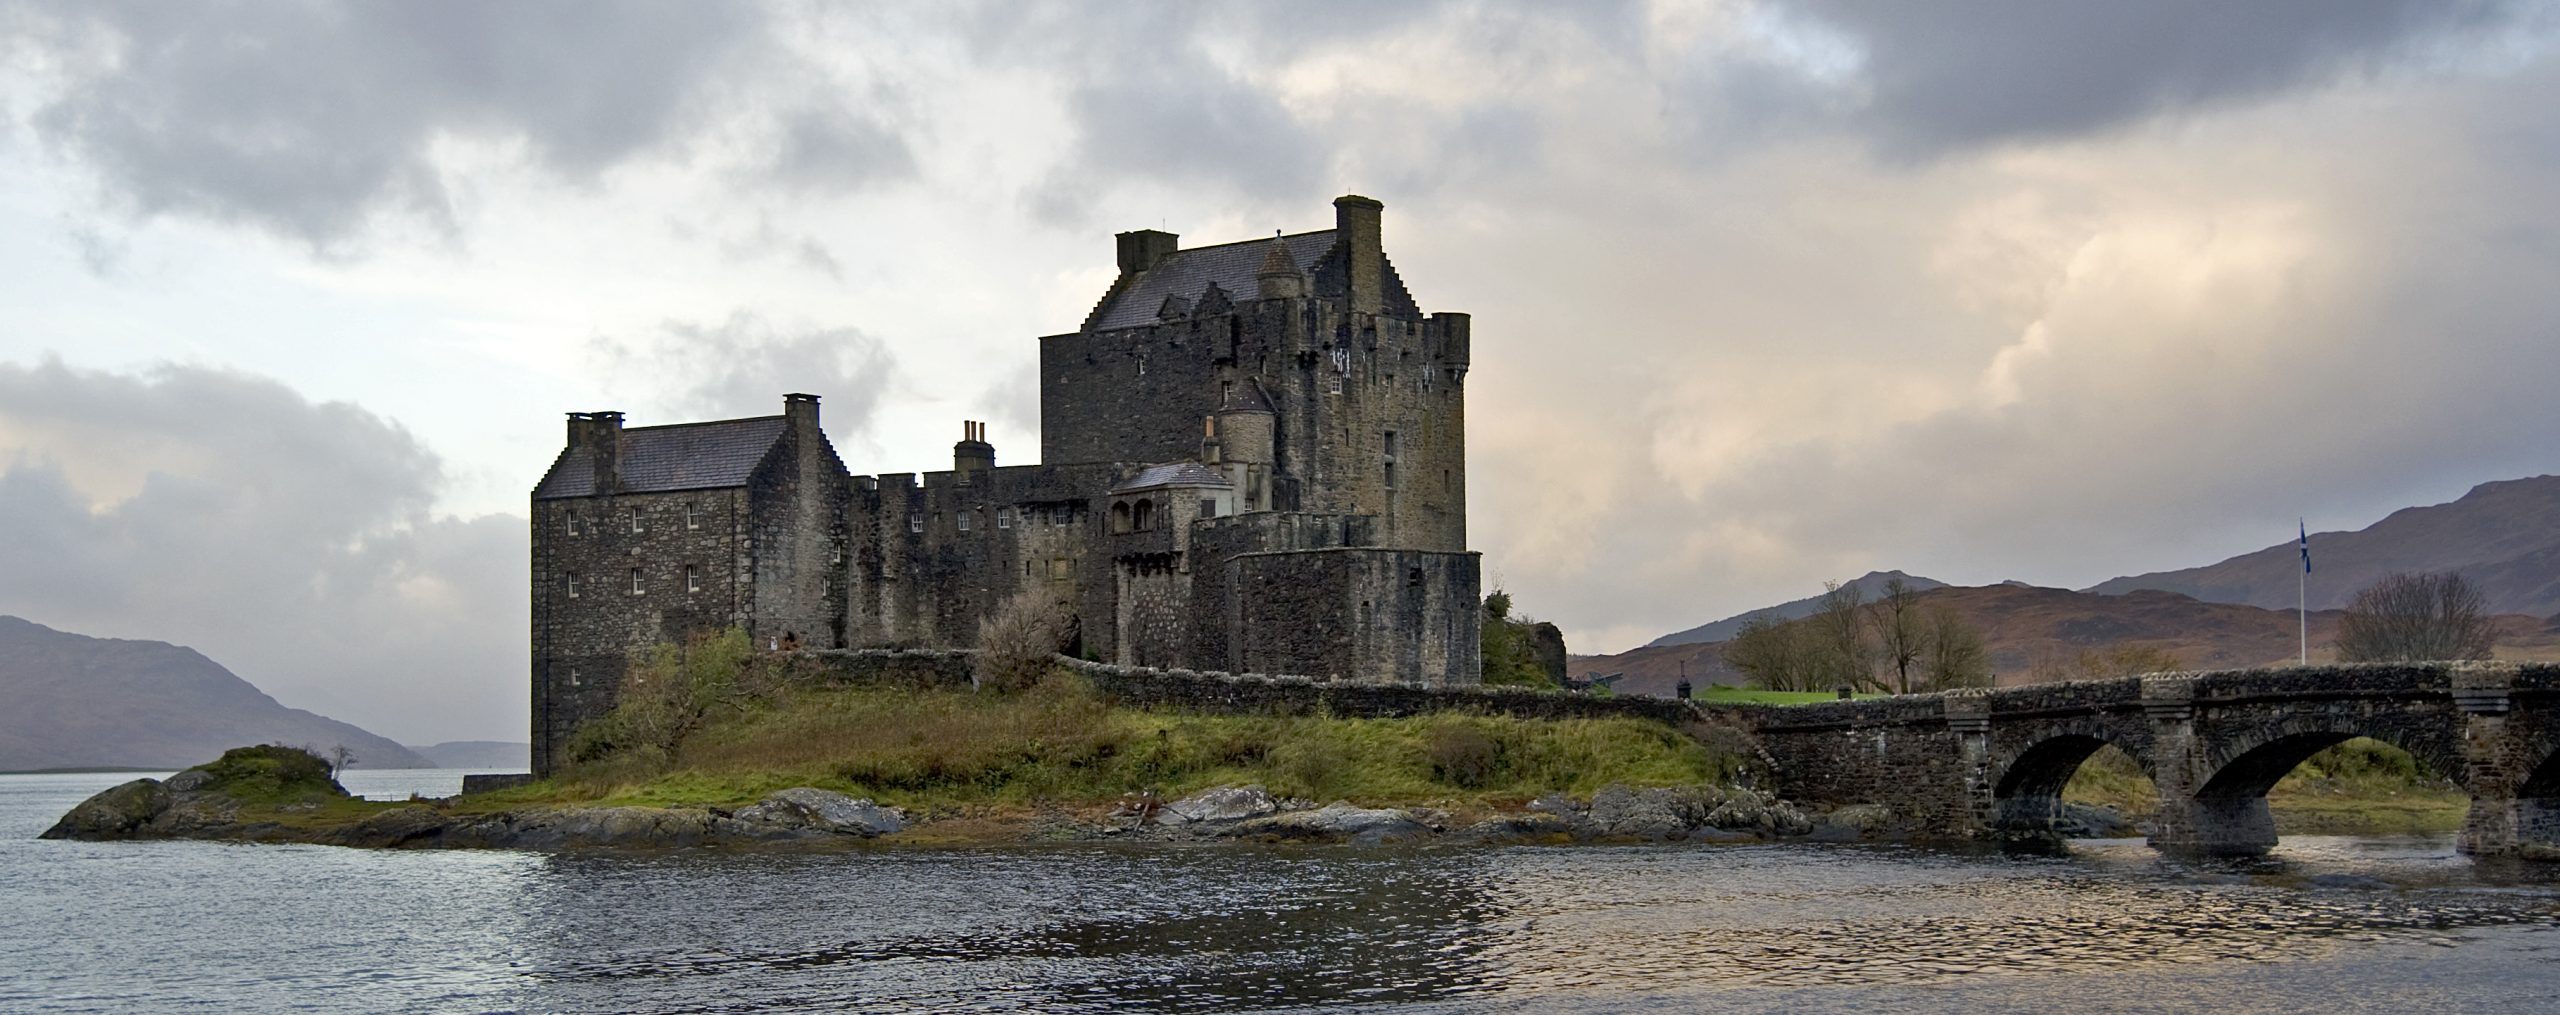 scotland_eilean_donan_castle